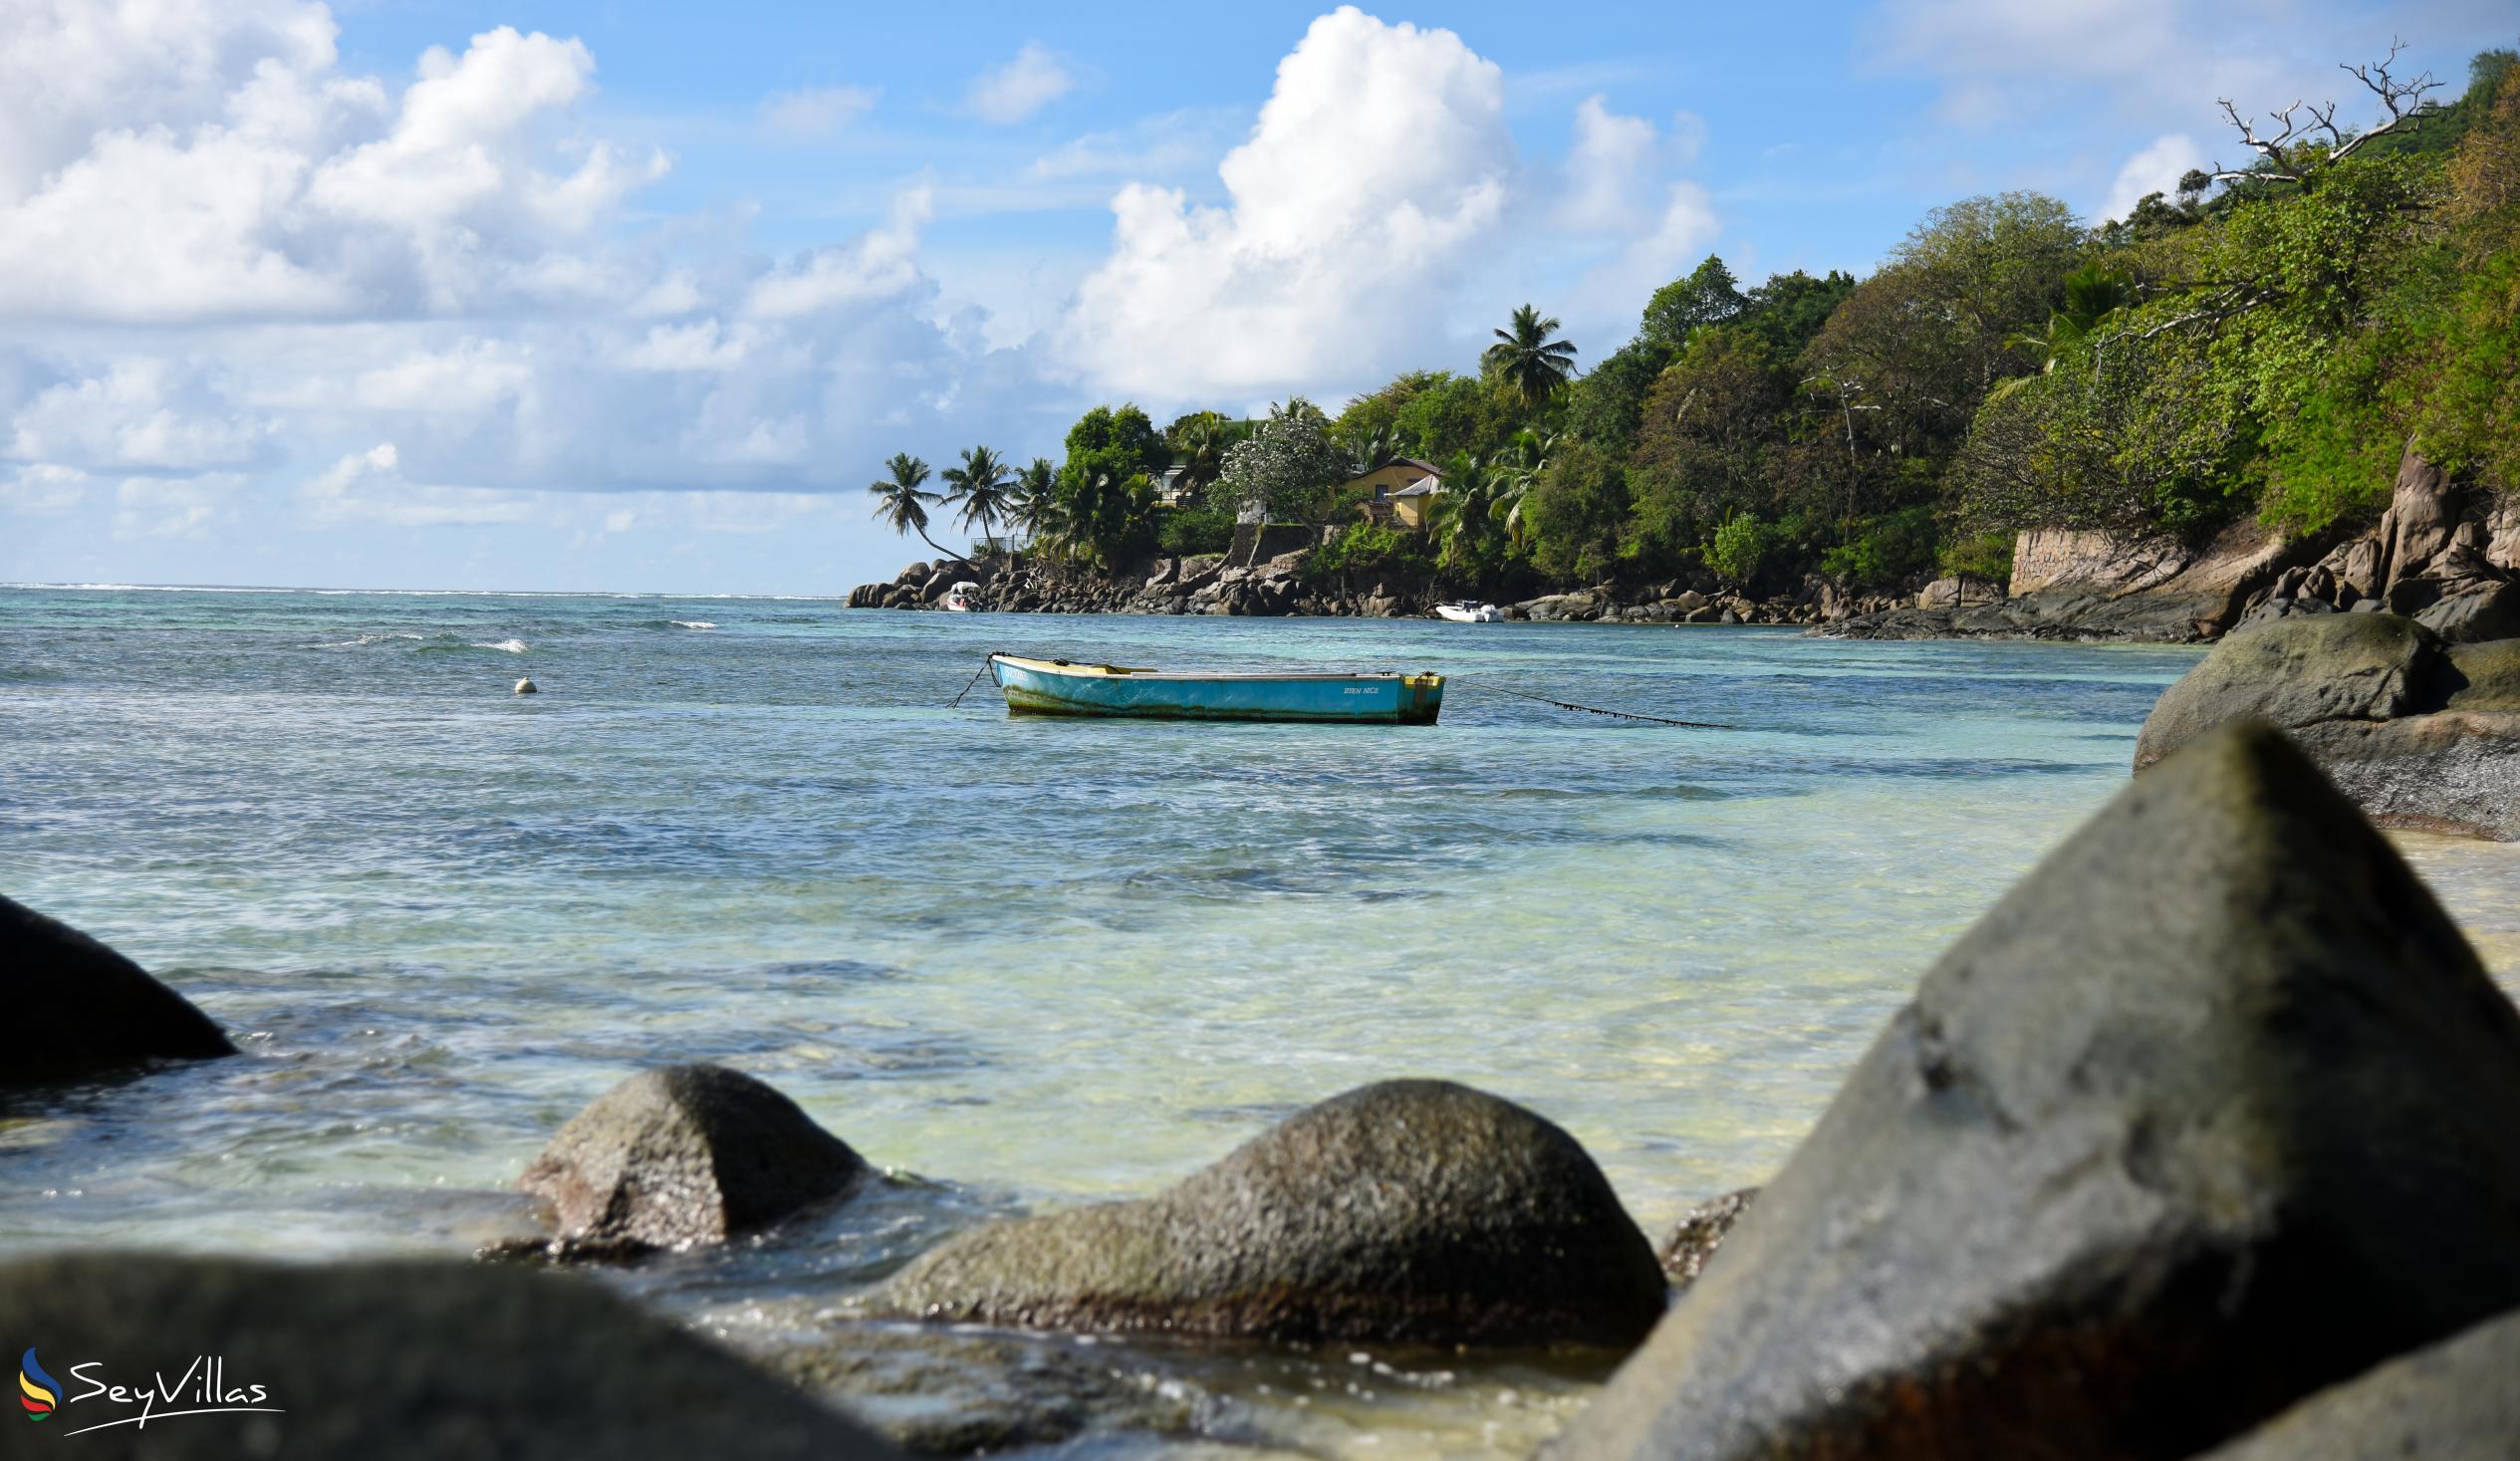 Photo 8: Anse Baleine - Mahé (Seychelles)